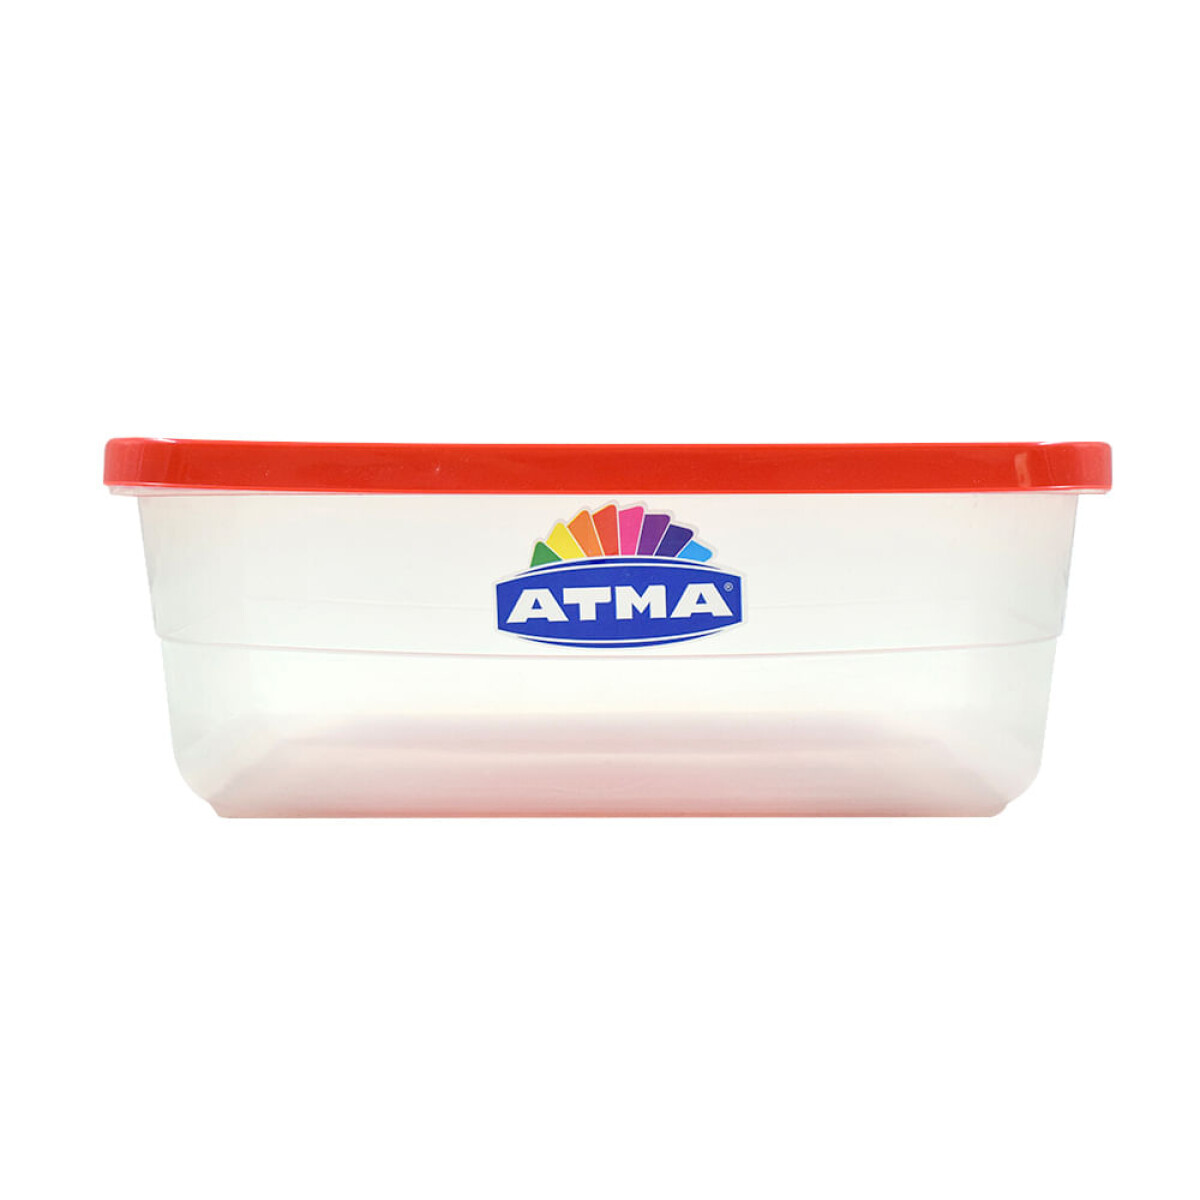 Tupper plastico Atmafresh 3 litros Atma 